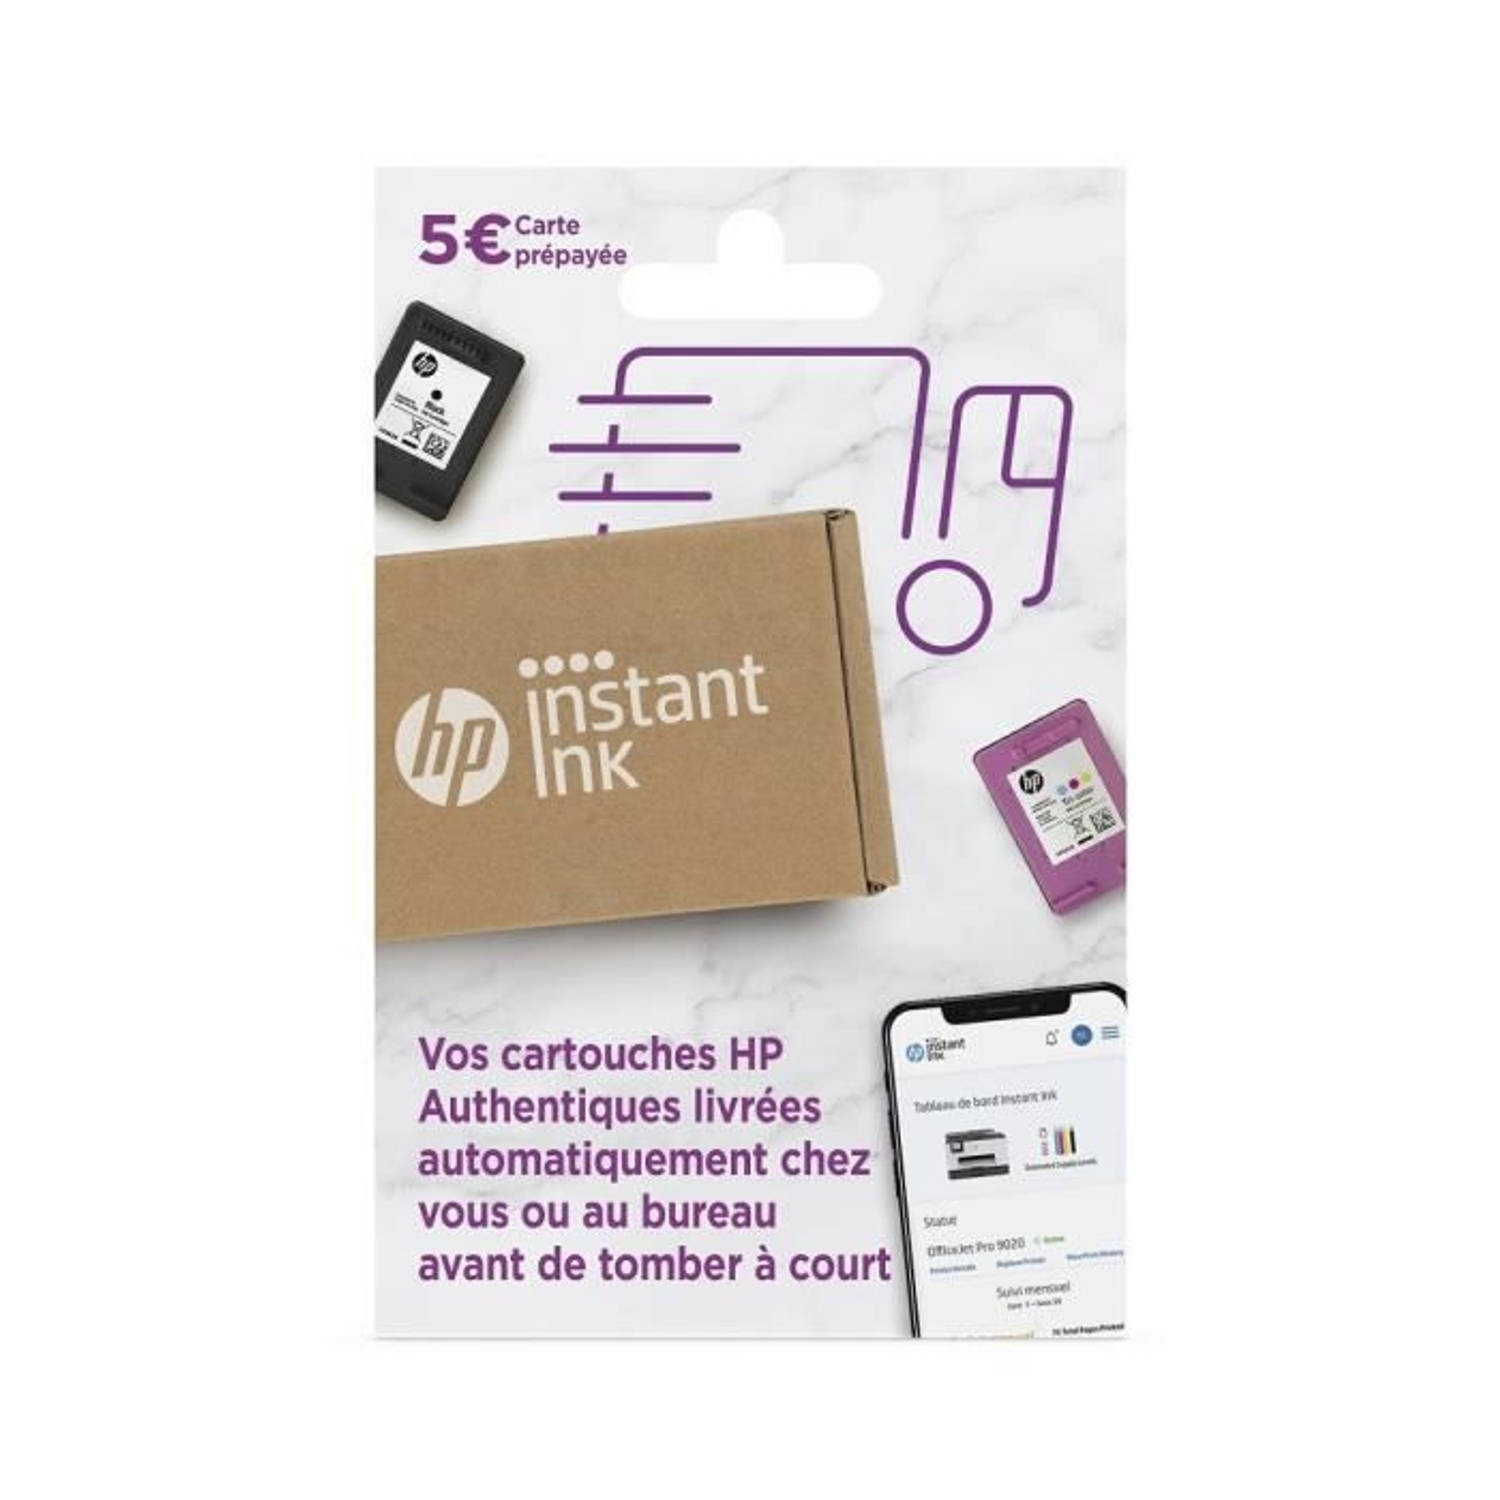 HP Instant Ink Prepaid Card - Afdrukplan voor niet-bindende cartridges en toners